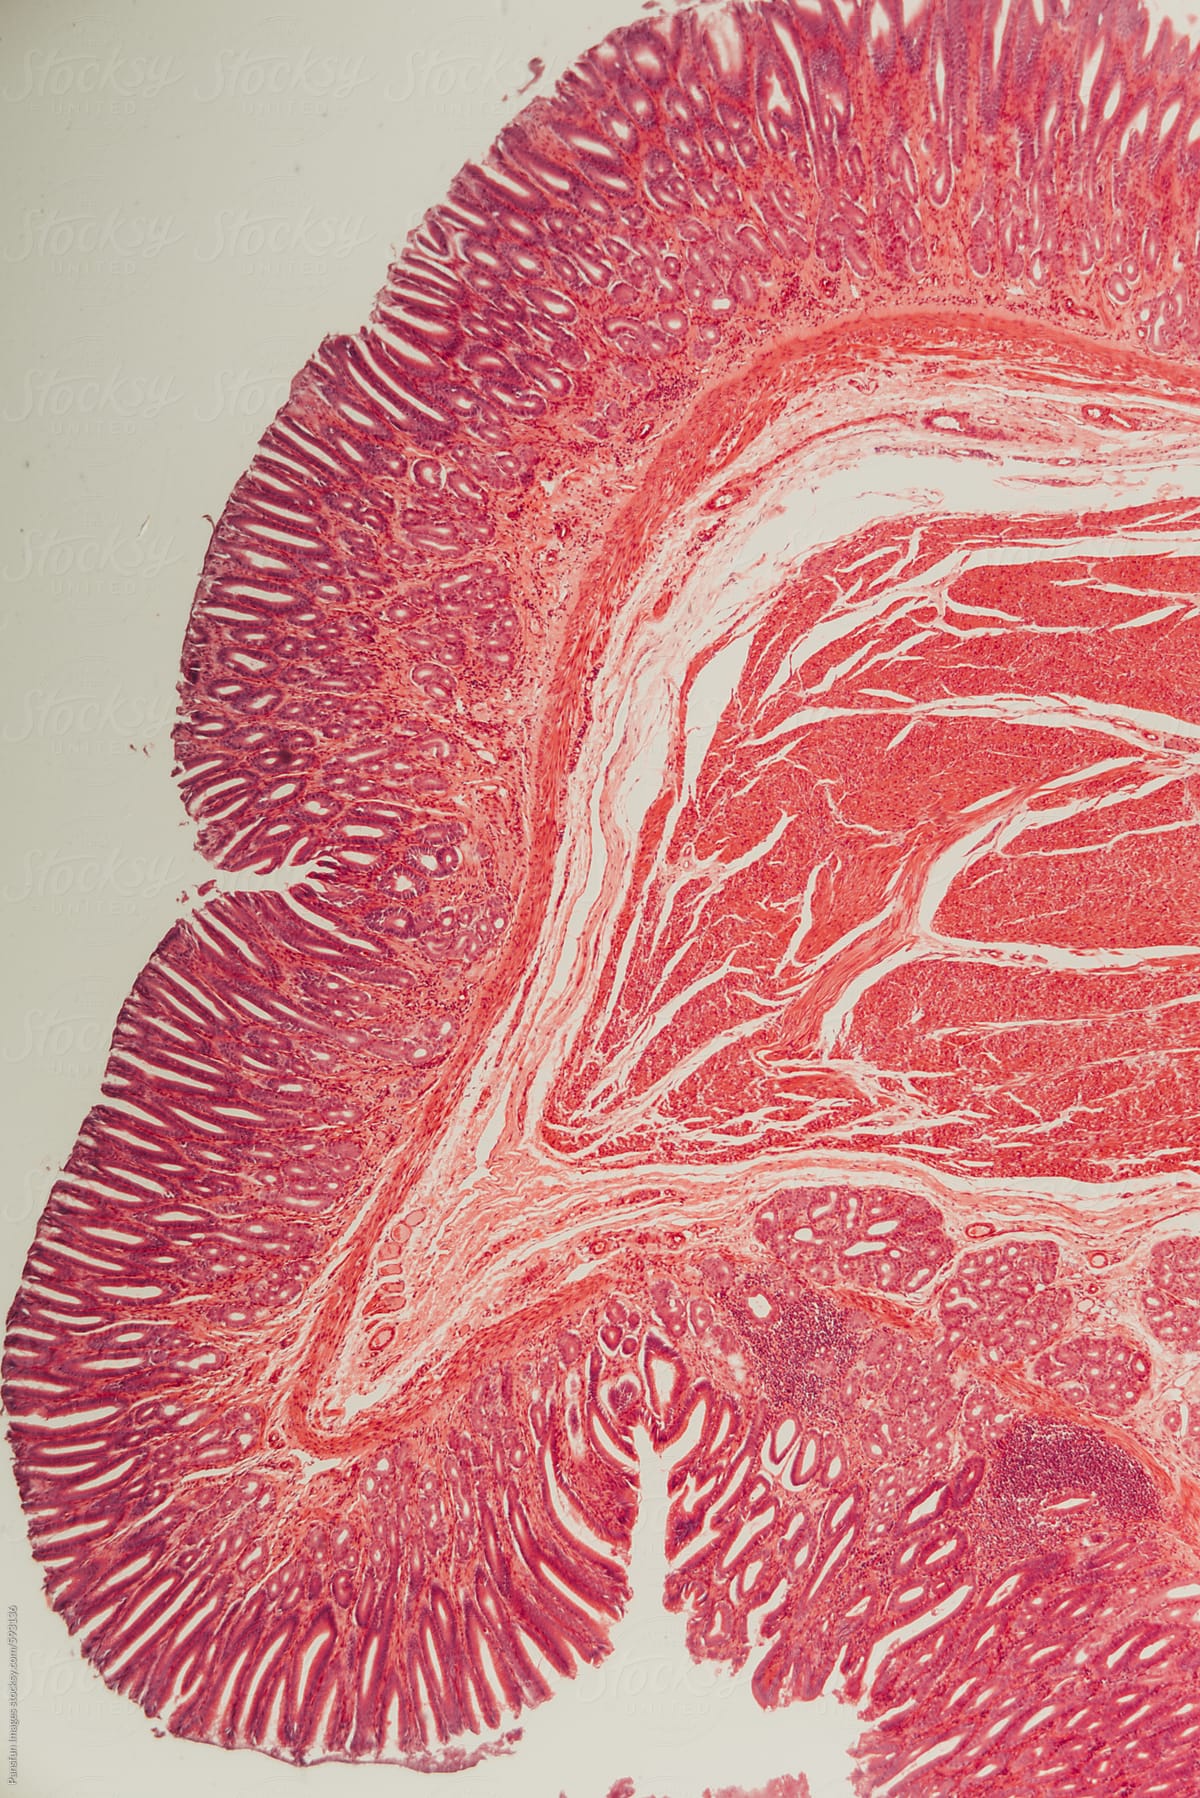 animal pyloric region of  stomach wall